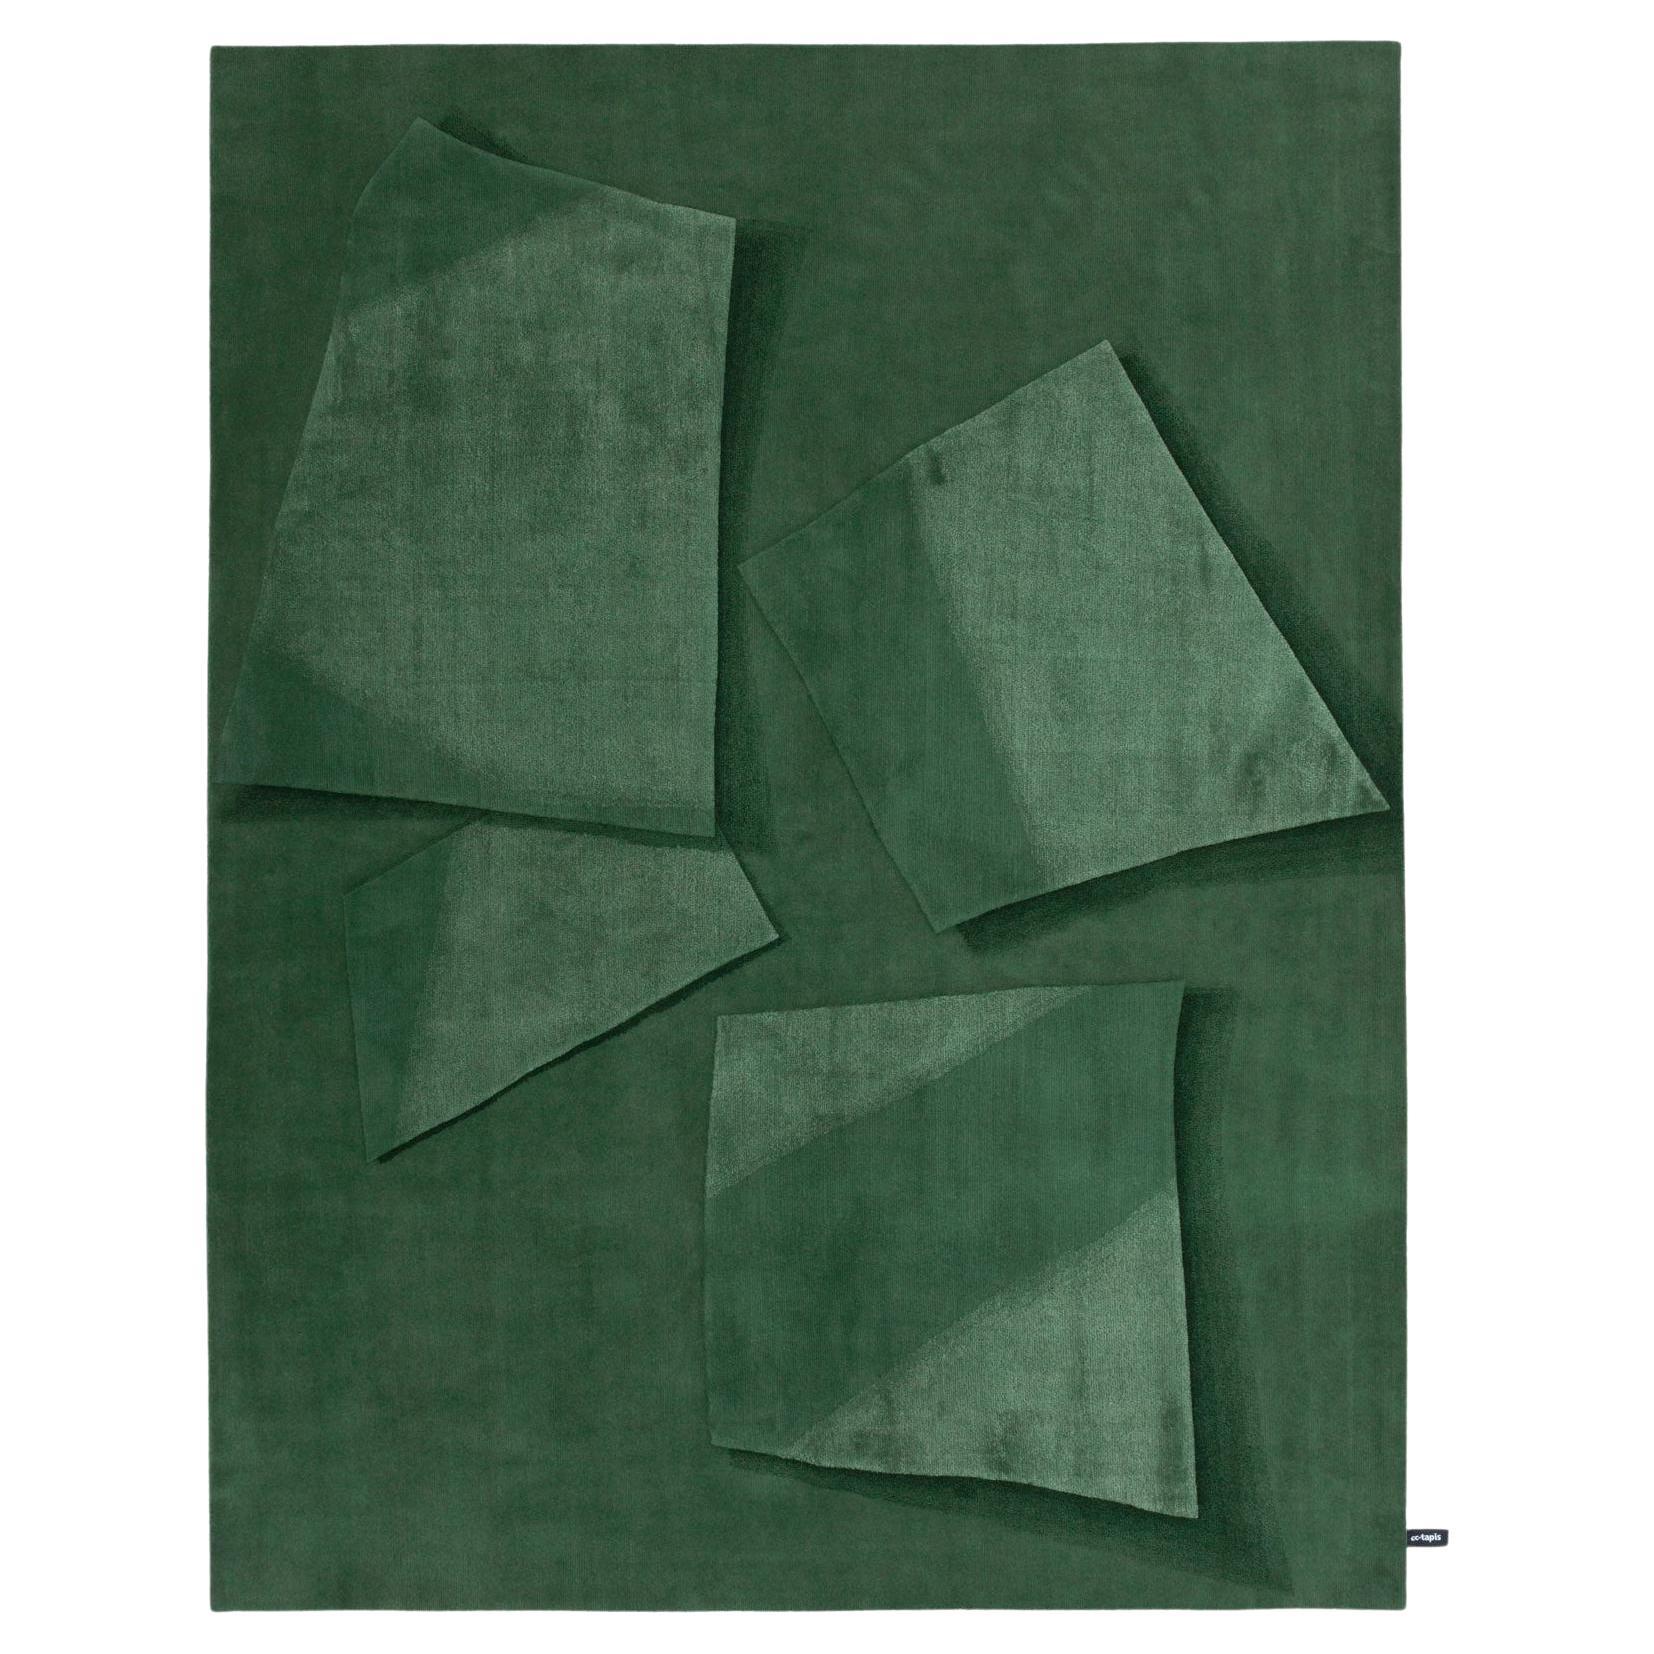 cc-tapis Ombra Rug in Green by Muller Van Severen - IN STOCK For Sale